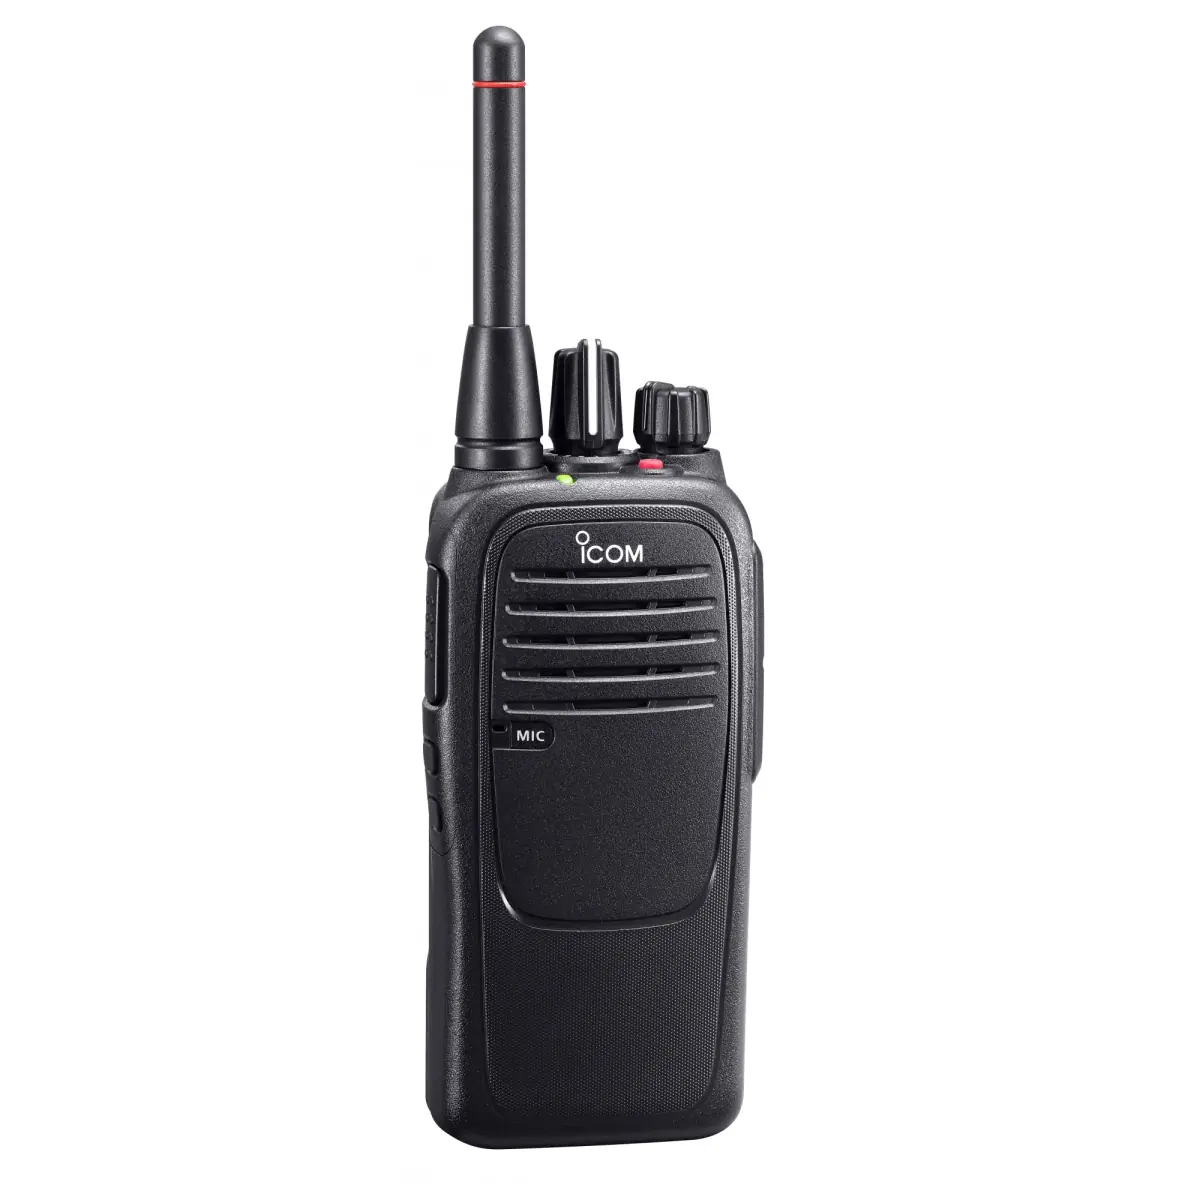 Icom IC-F29SR2 - Analoge radio zonder licentie PMR446